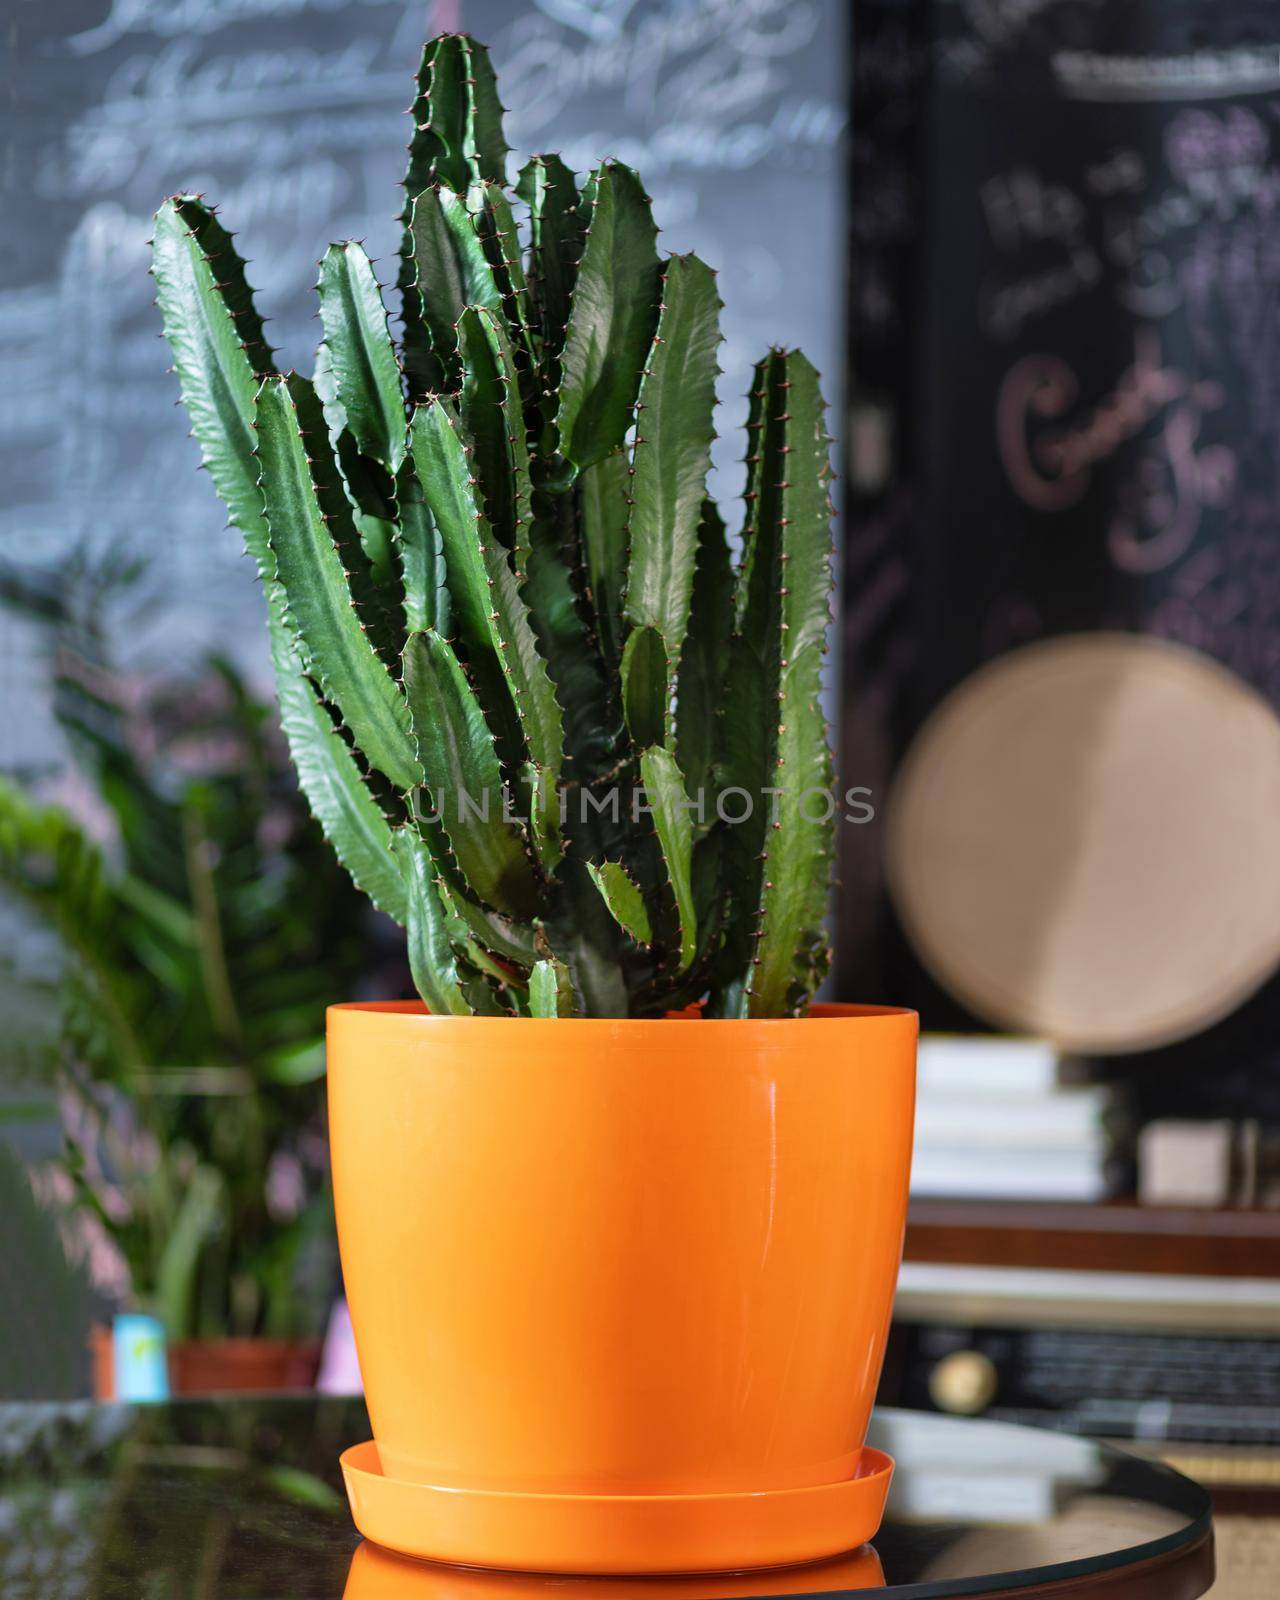 BIg cactus in the orange pot by ferhad